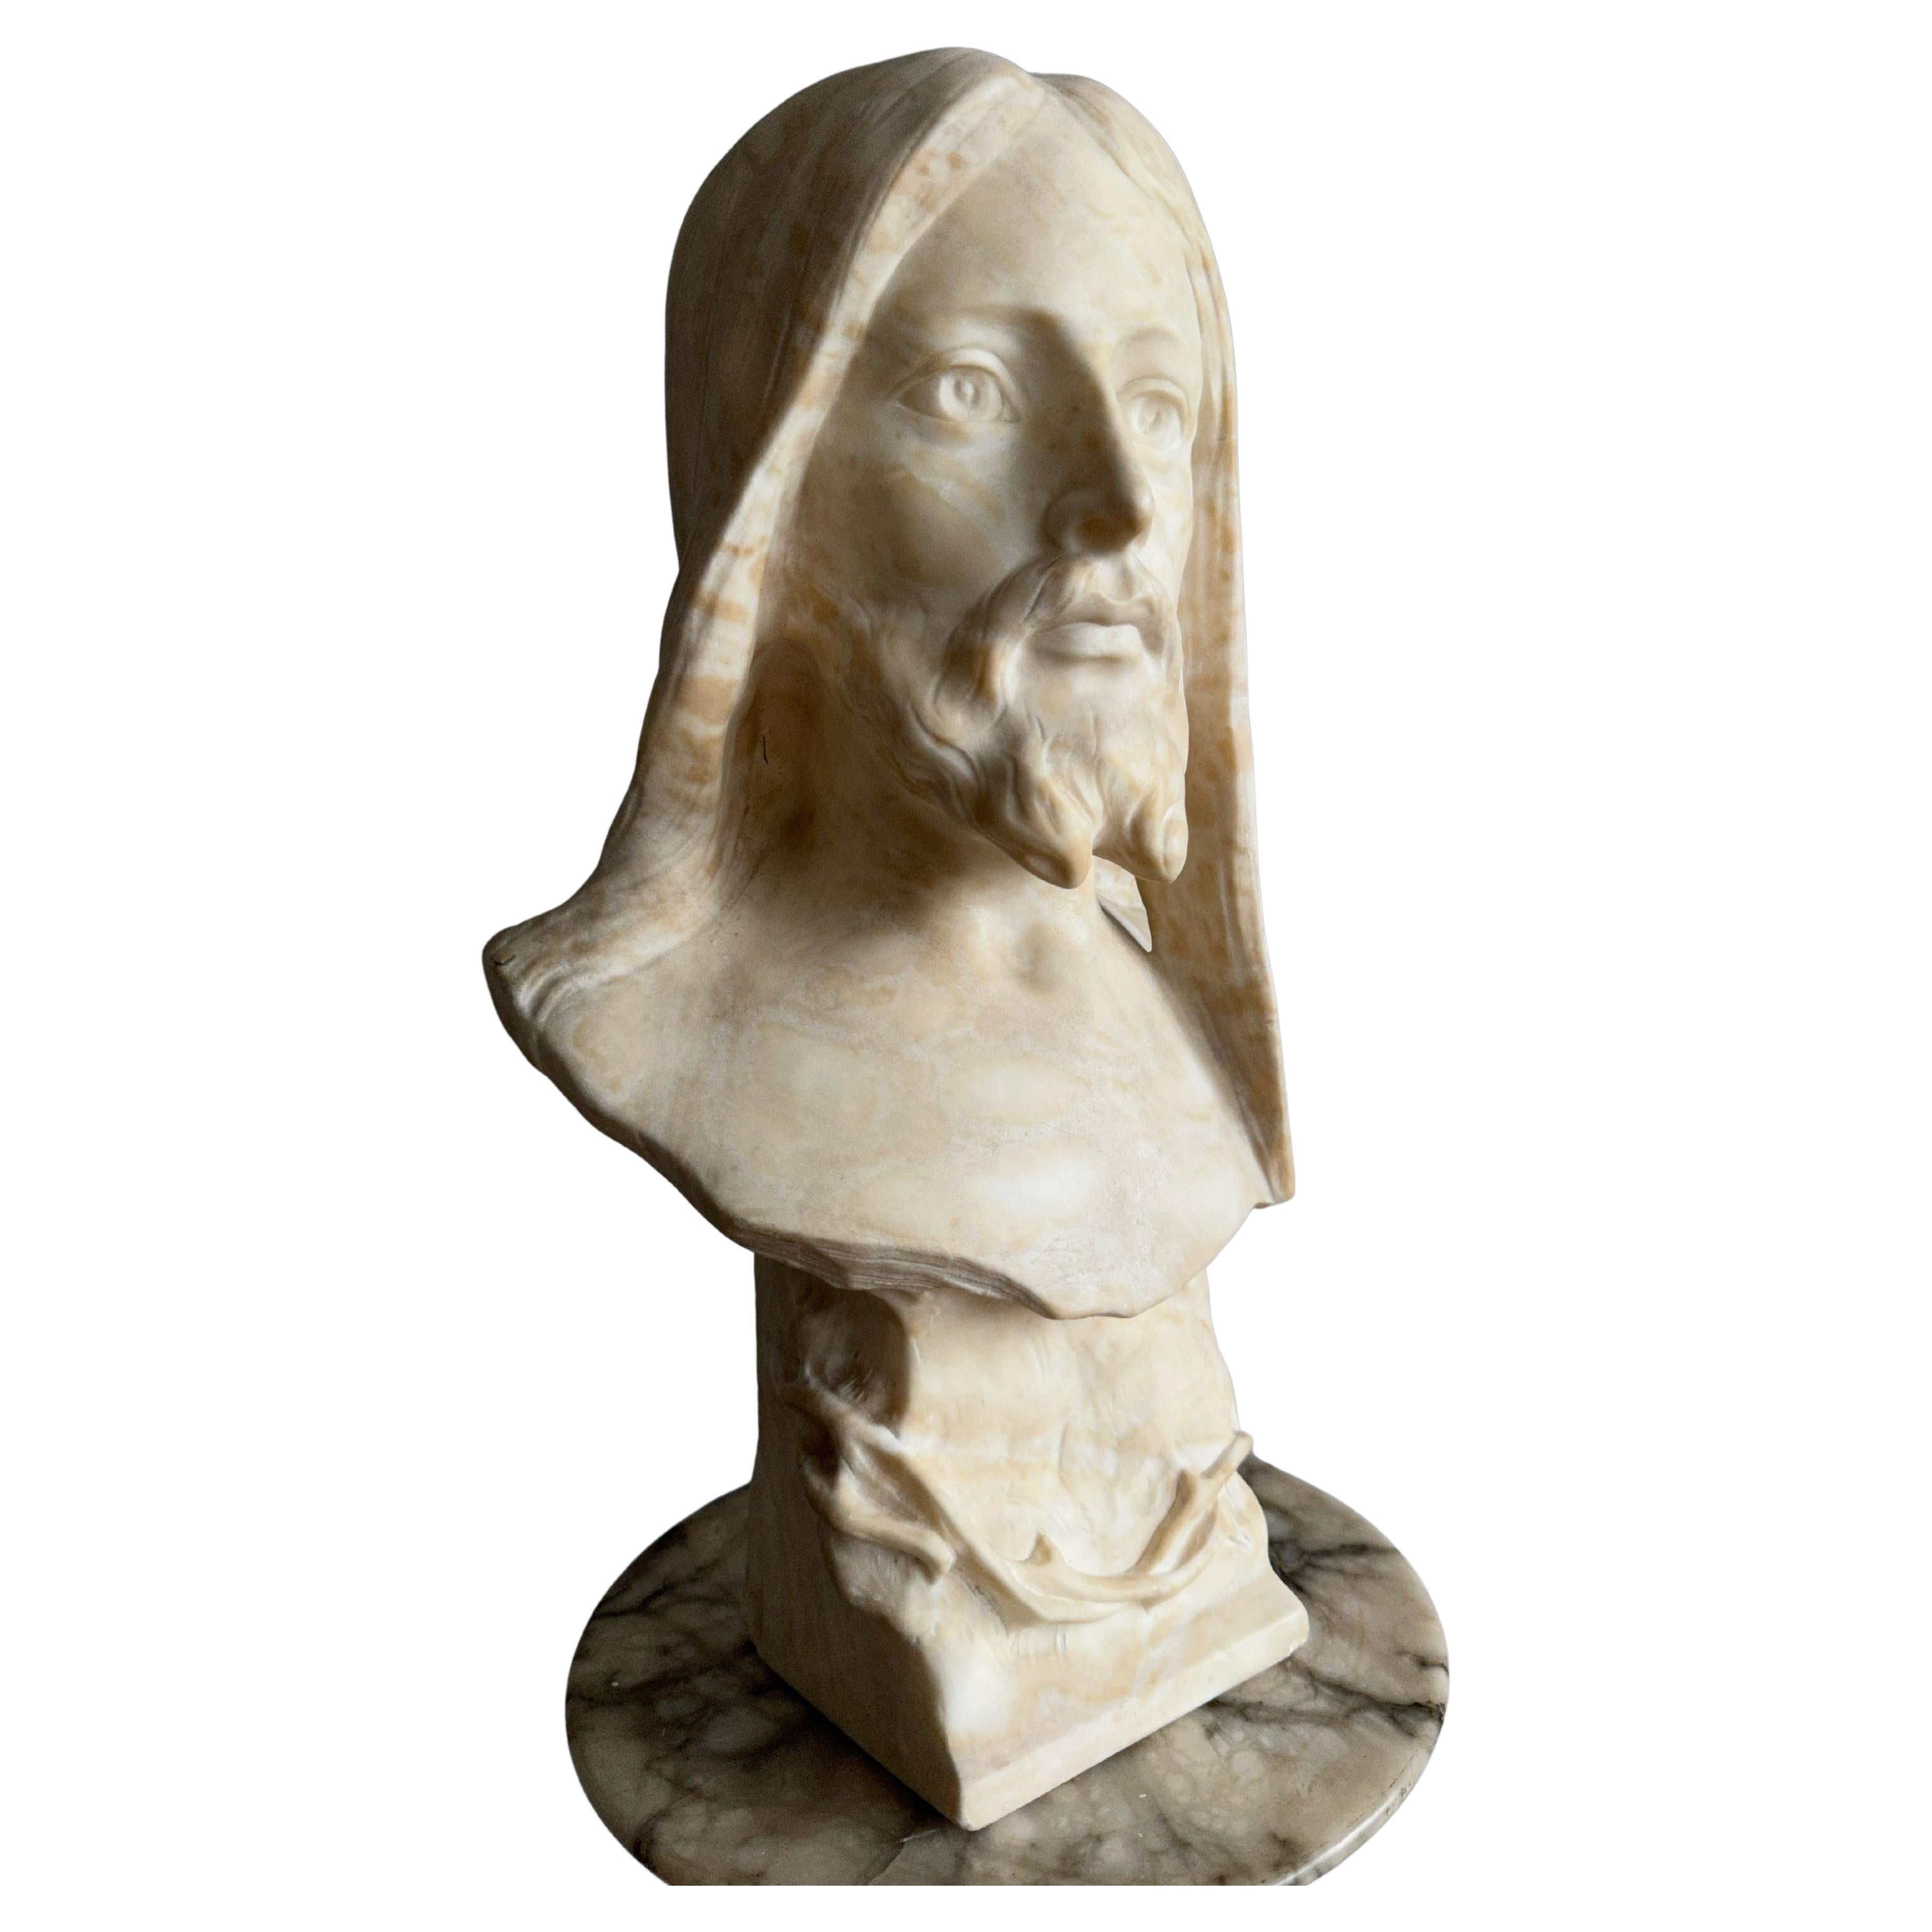 Antique, Early 1900 Large Hand Carved Alabaster Sculpture / Bust of Jesus Christ